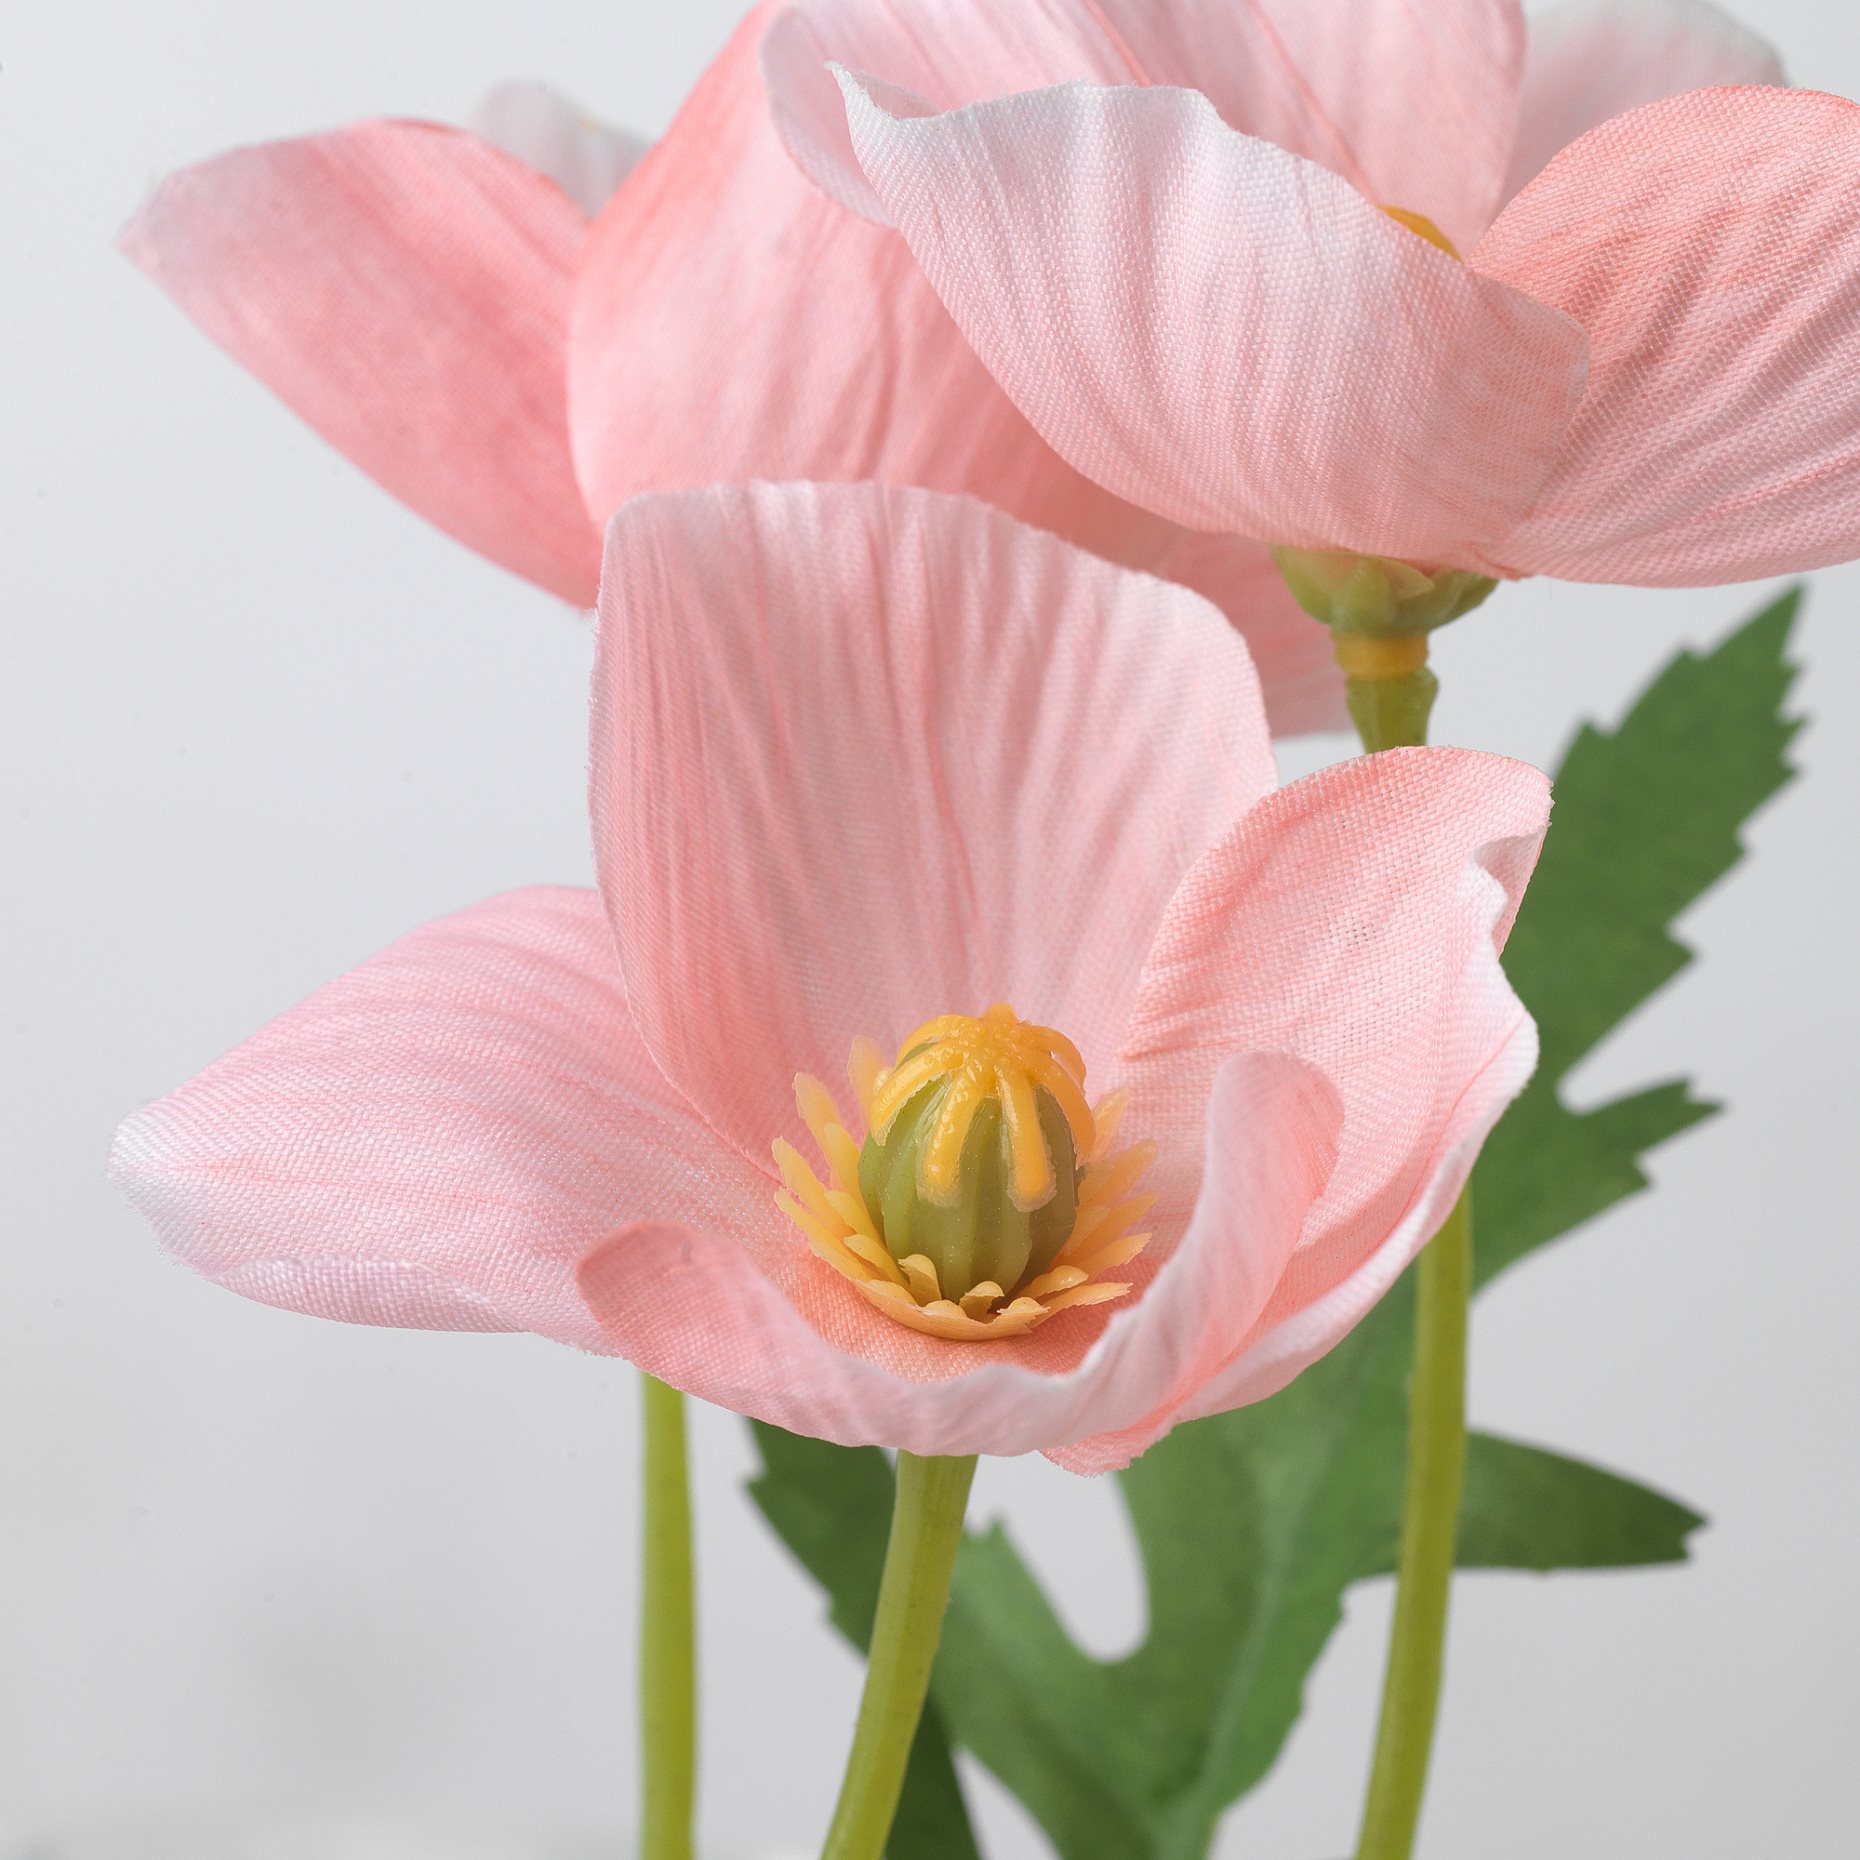 SMYCKA, artificial flower in/outdoor/Poppy, 27 cm, 305.601.51